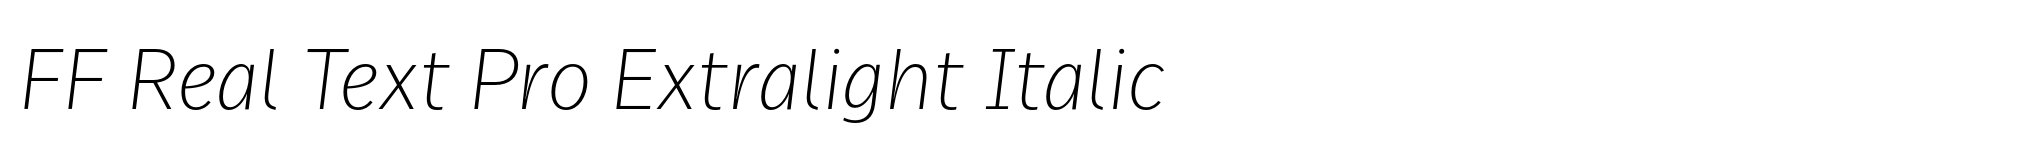 FF Real Text Pro Extralight Italic image